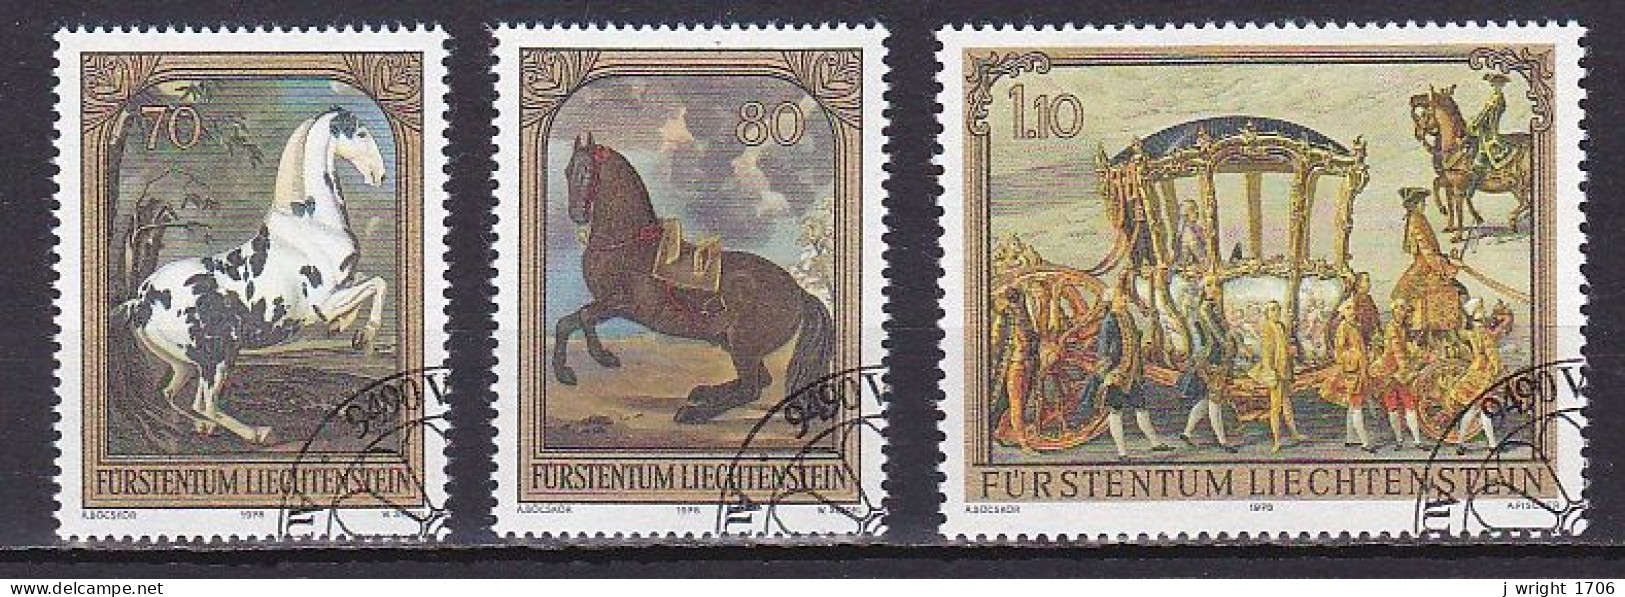 Liechtenstein, 1978, Paintings, Set, CTO - Used Stamps